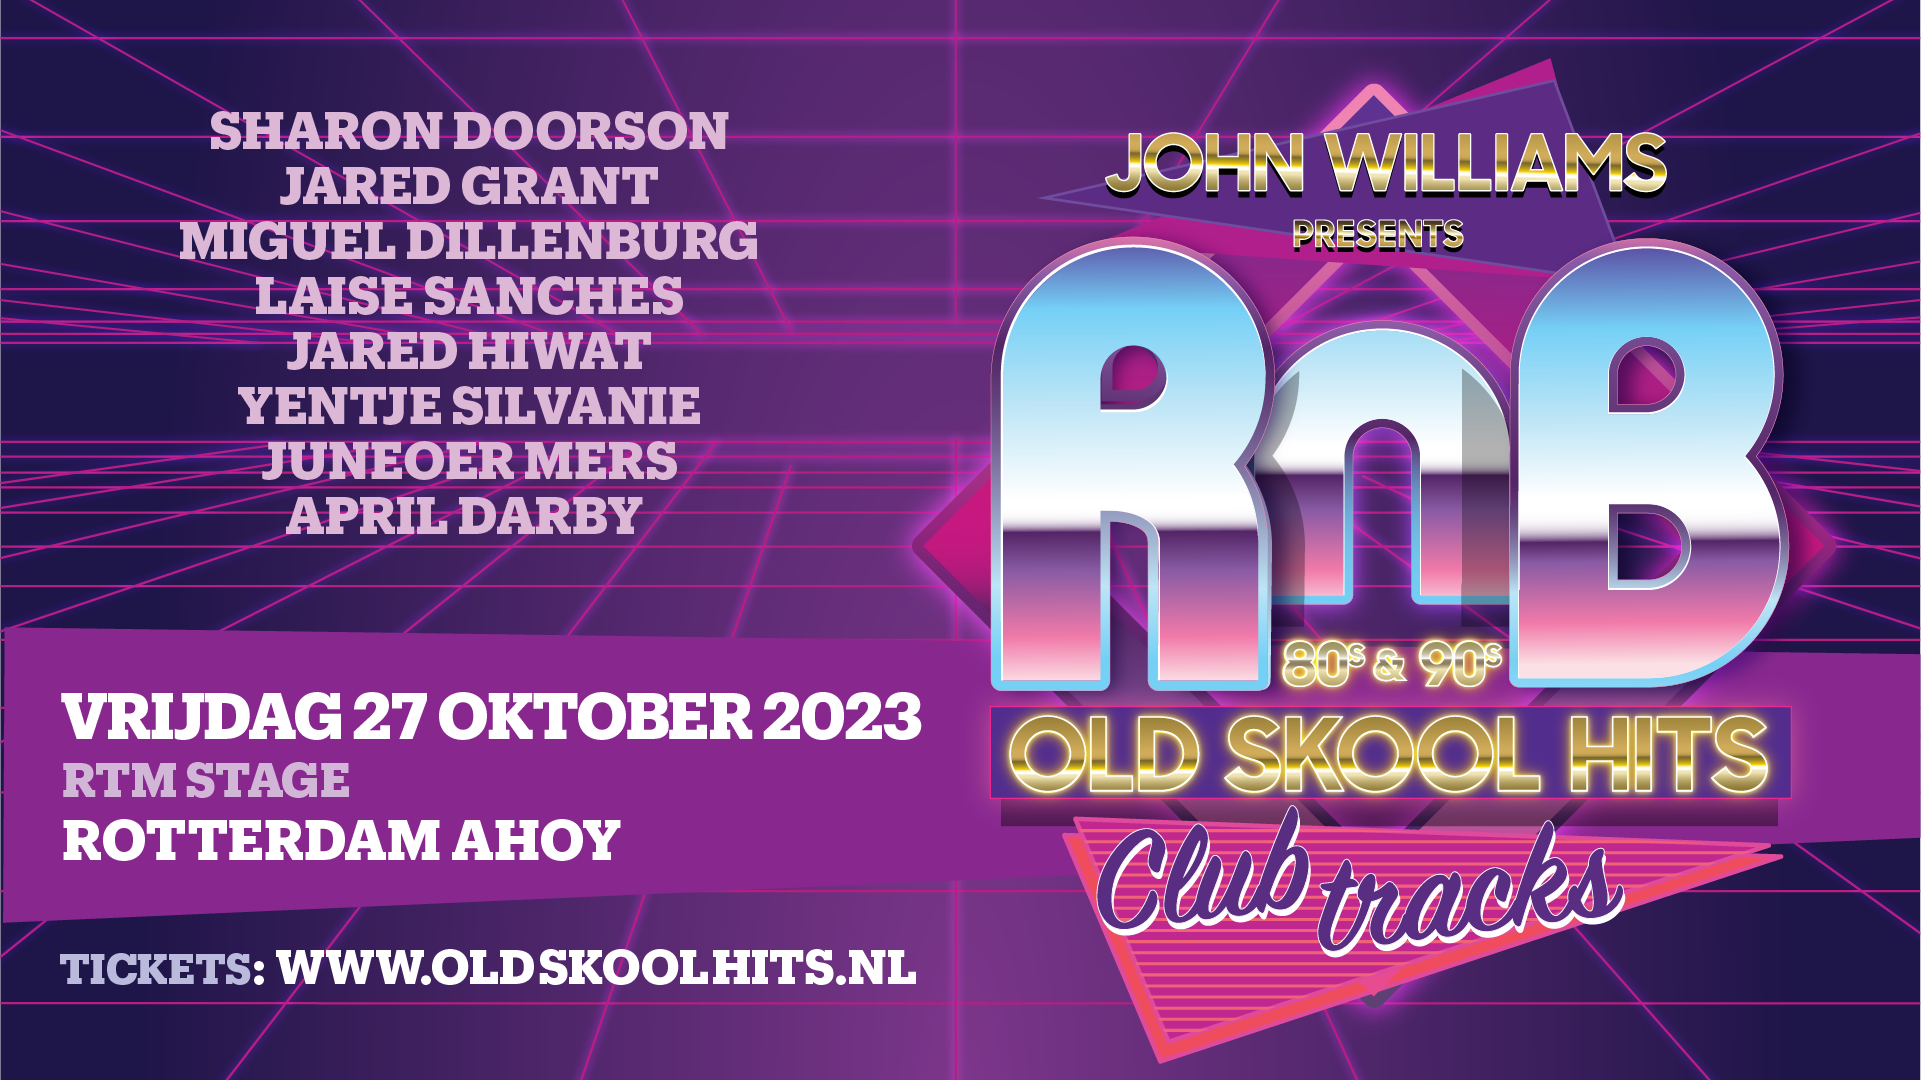 John Williams presents RnB Oldskool Hits Club Tracks